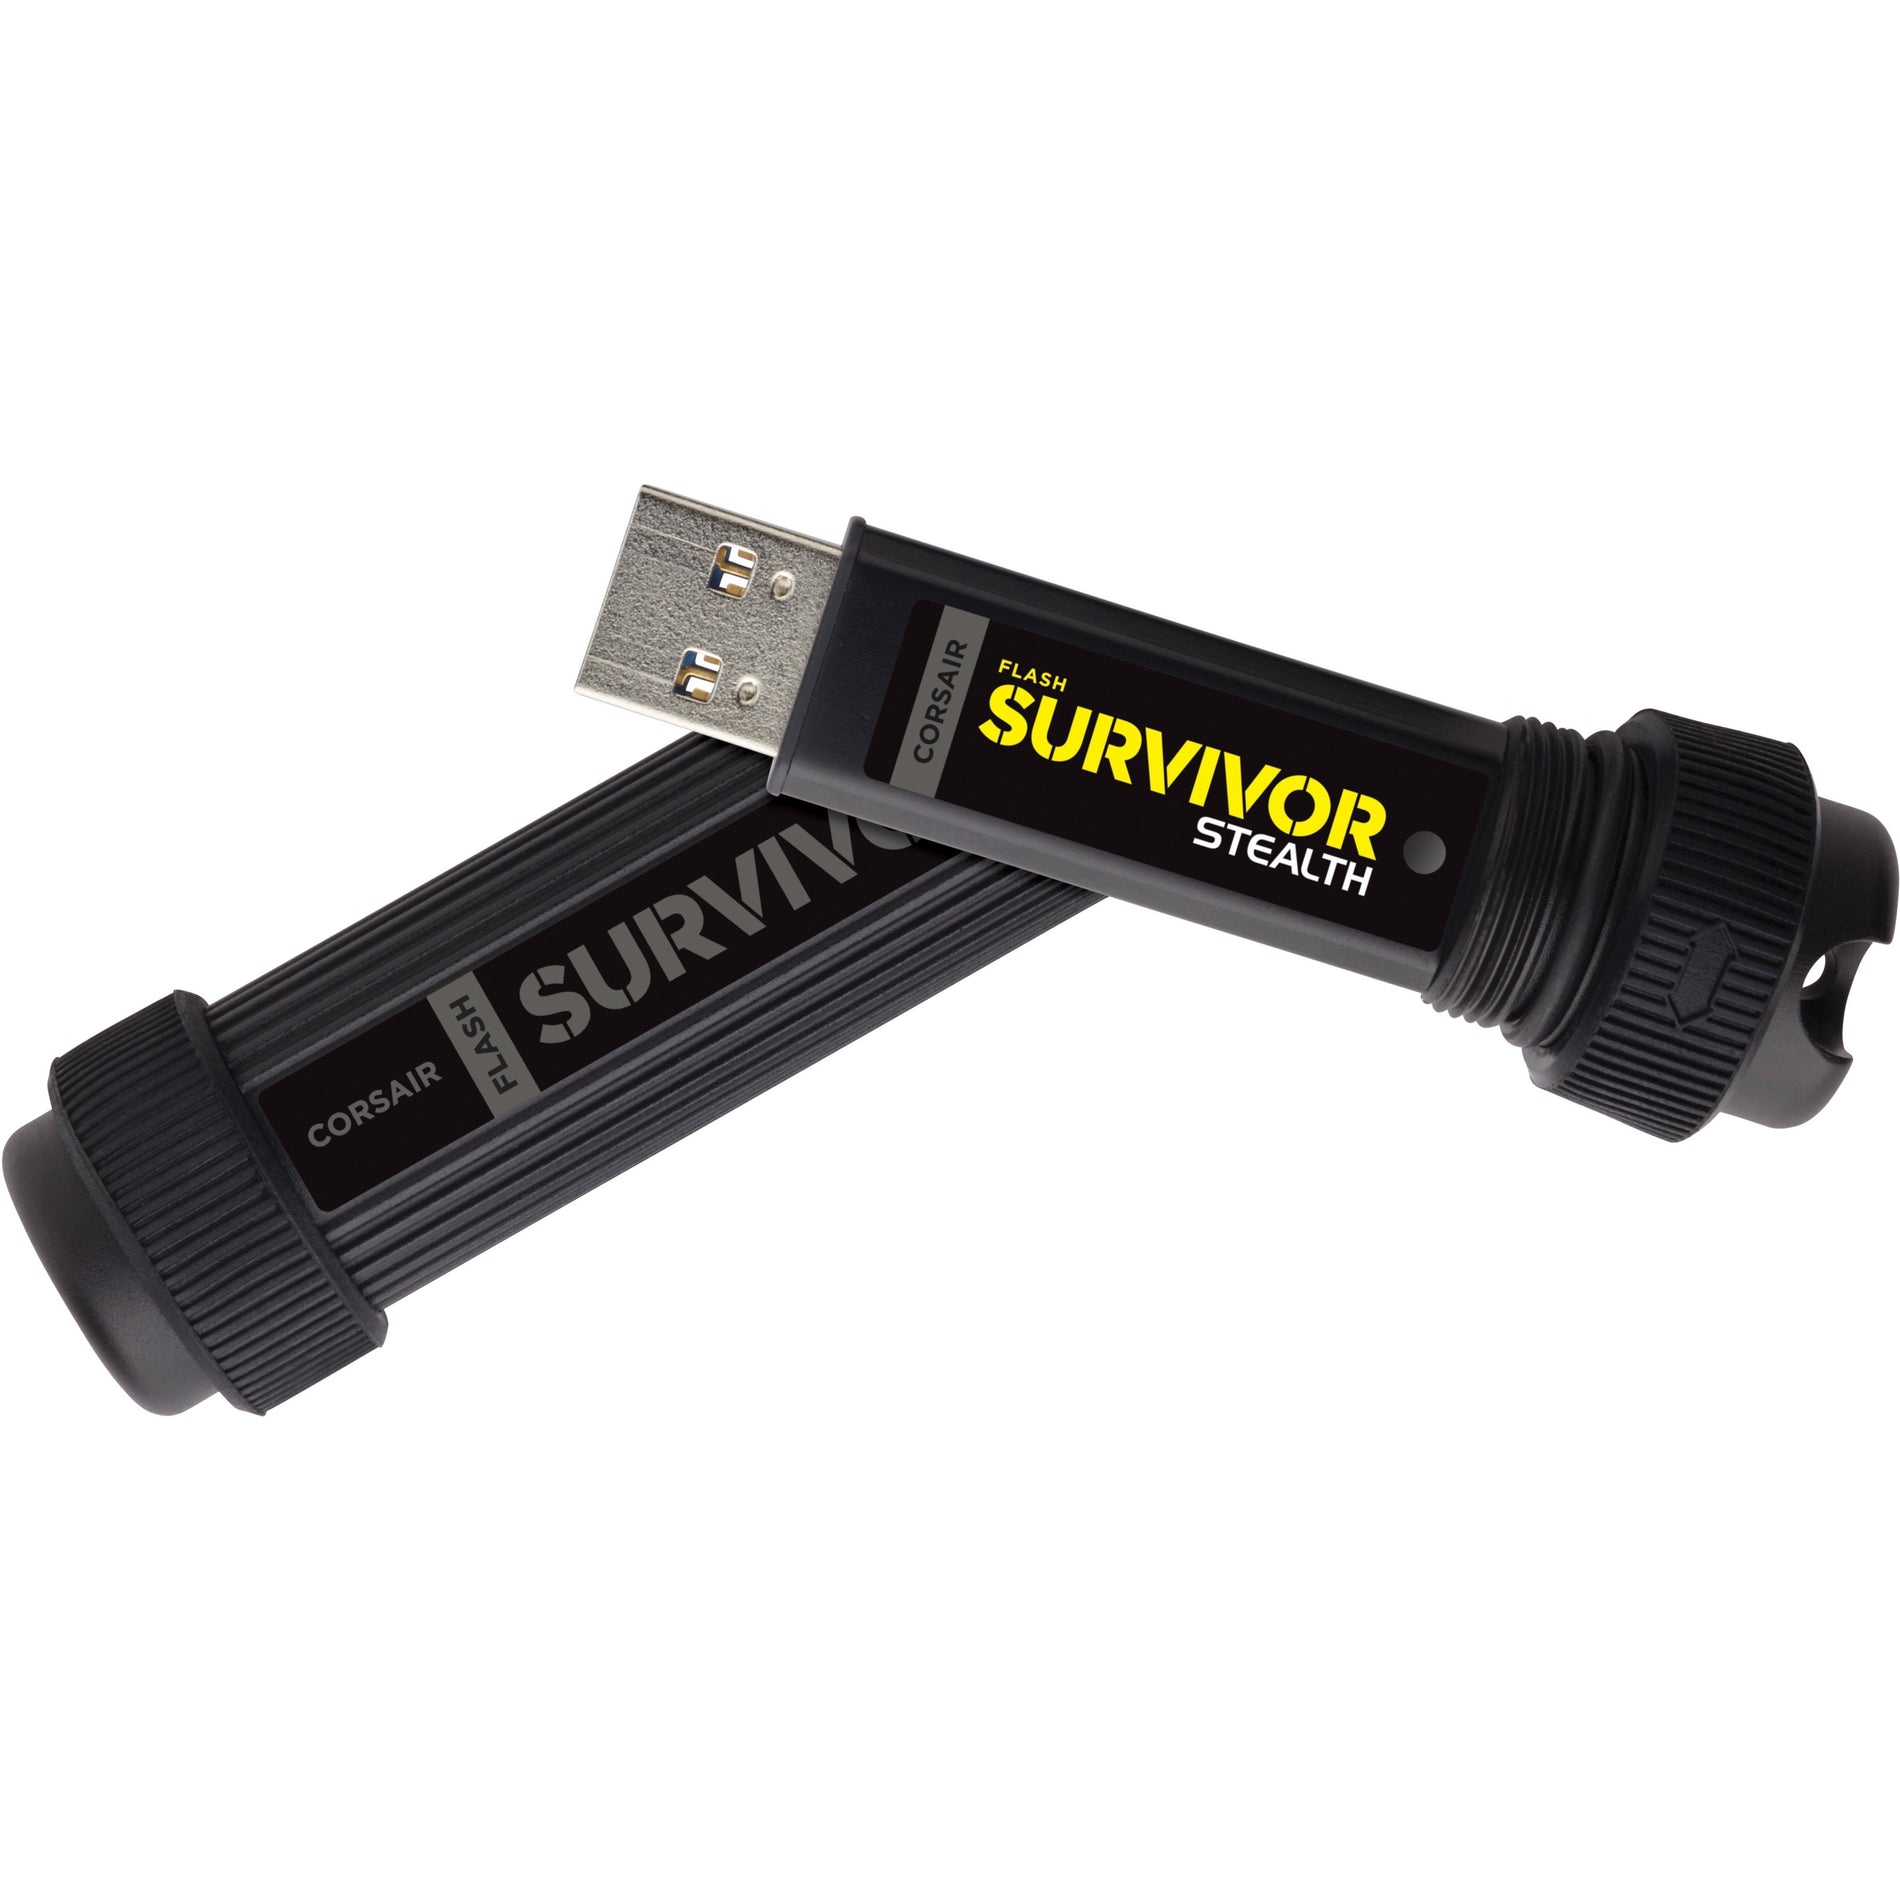 Corsair CMFSS3B-32GB Flash Survivor Stealth 32GB USB 3.0 Flash Drive, Vibration Resistant, Water Proof, Shock Resistant